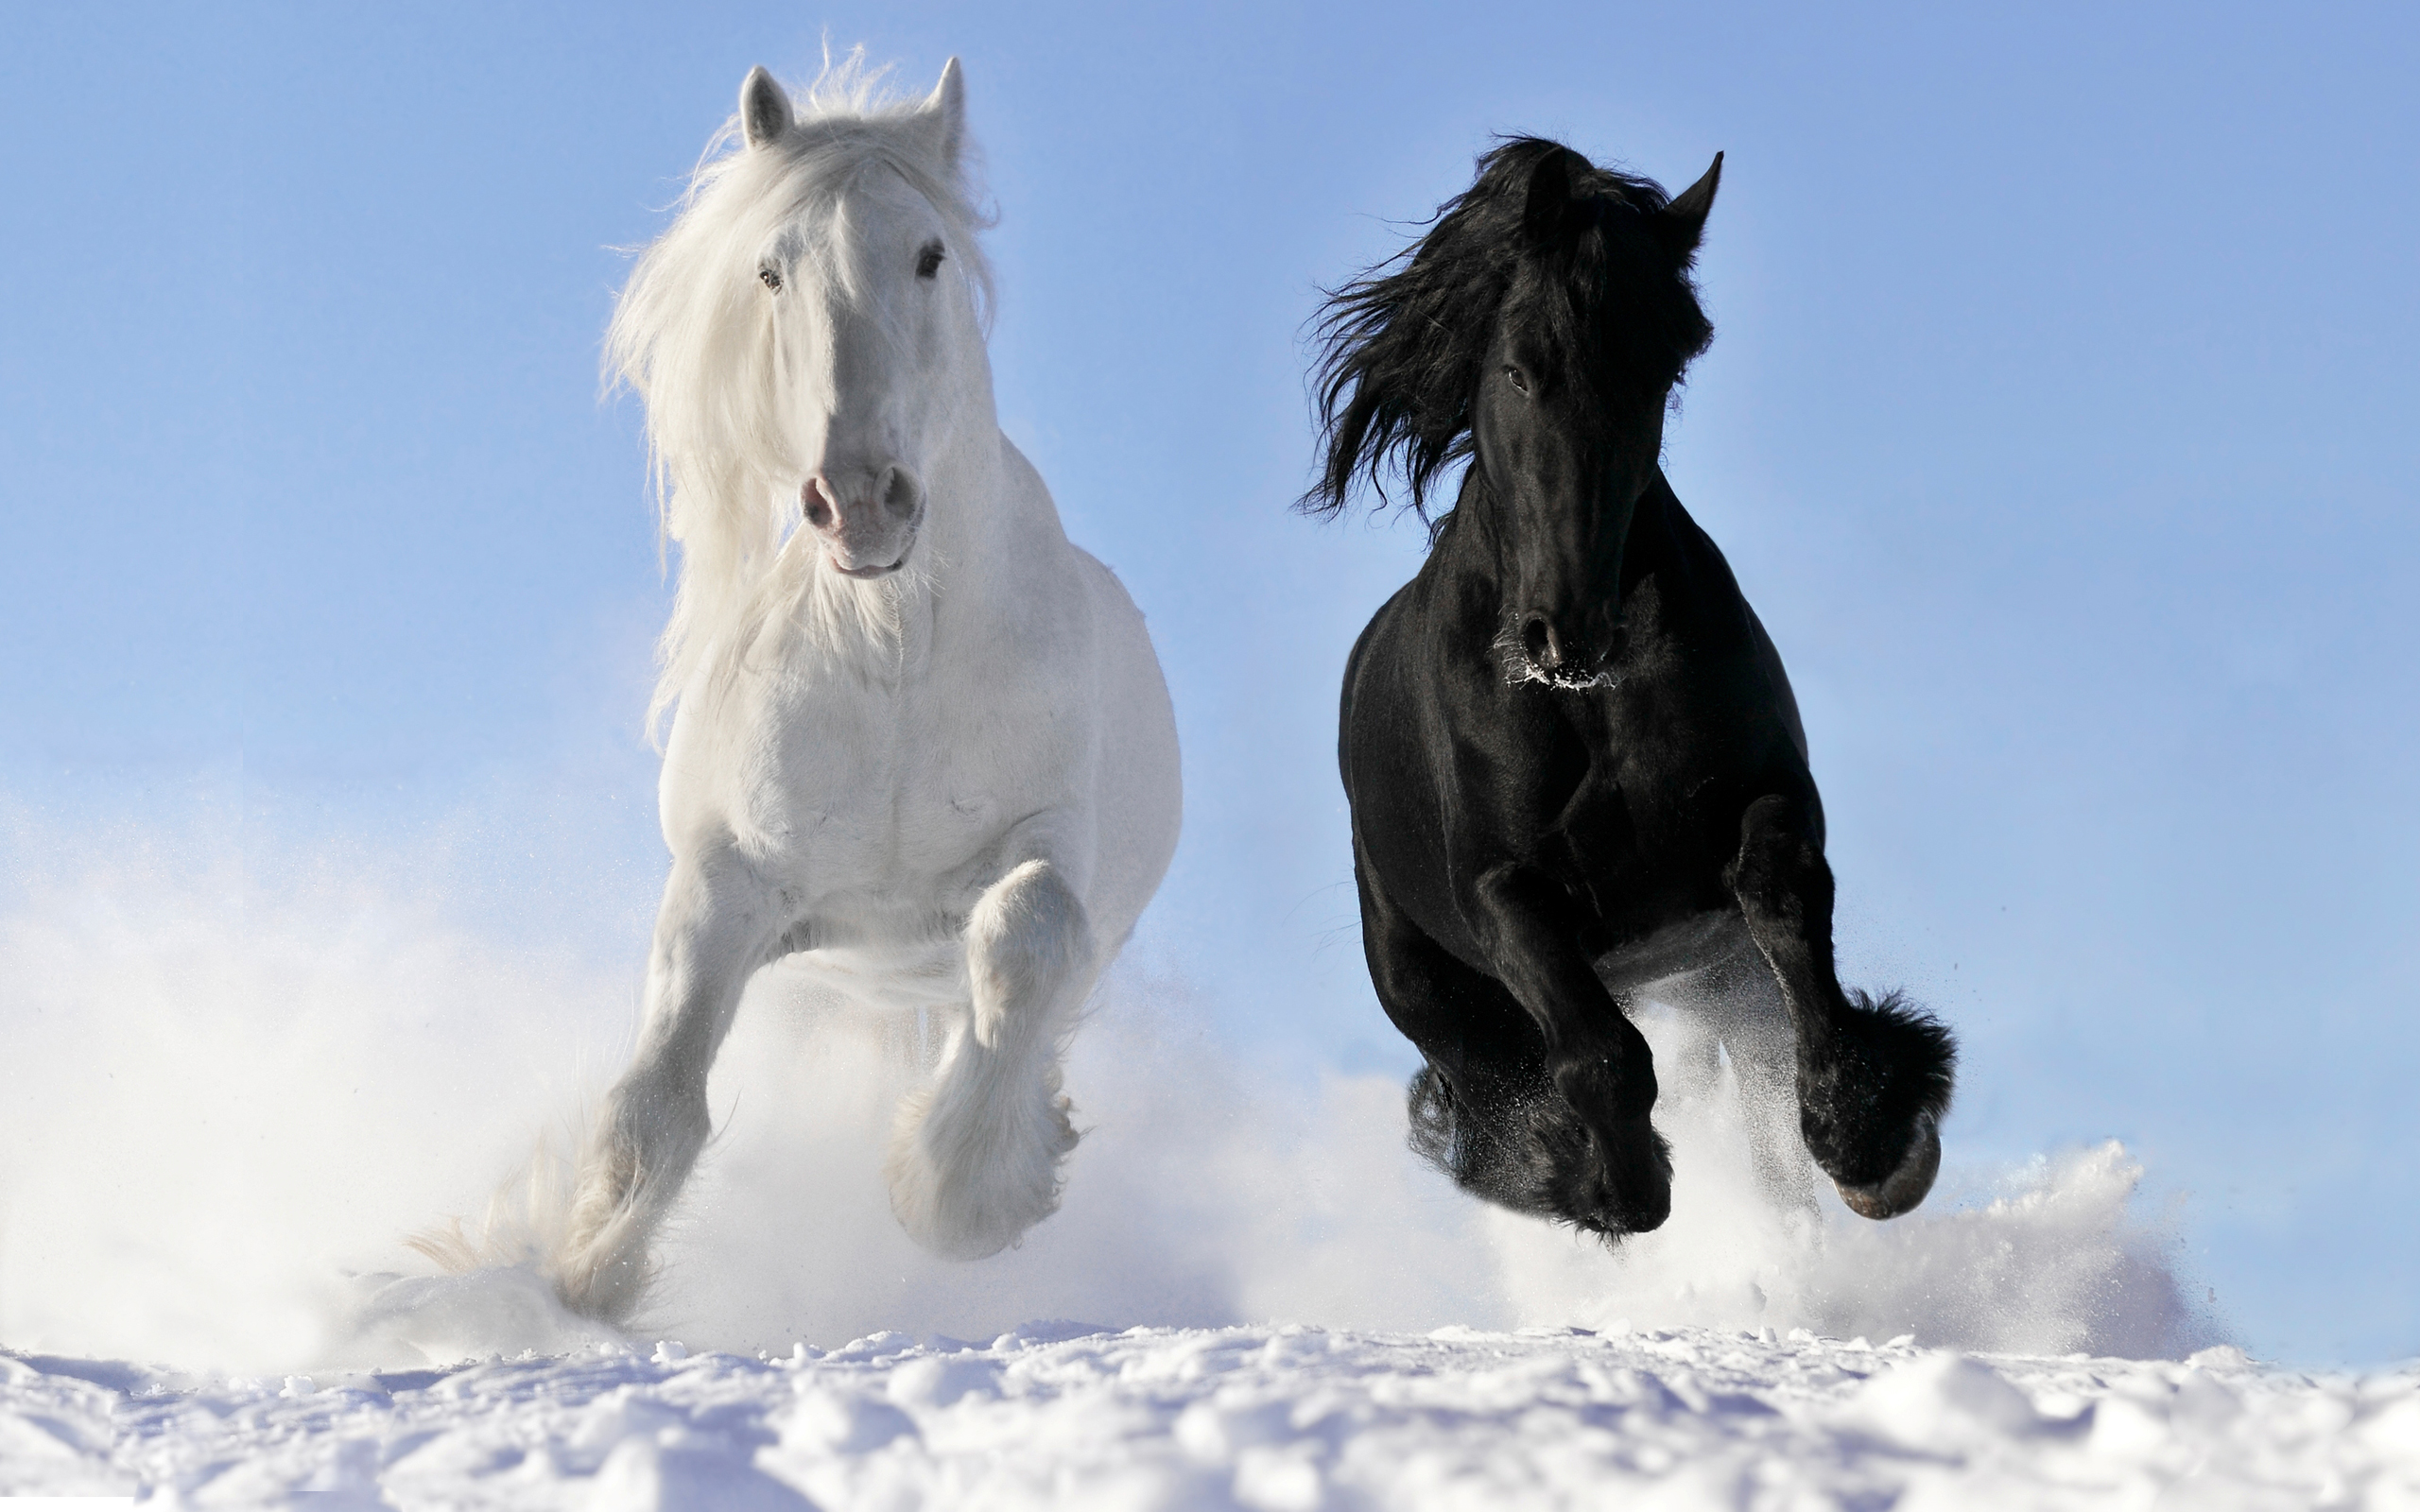 569047 descargar imagen animales, caballo: fondos de pantalla y protectores de pantalla gratis